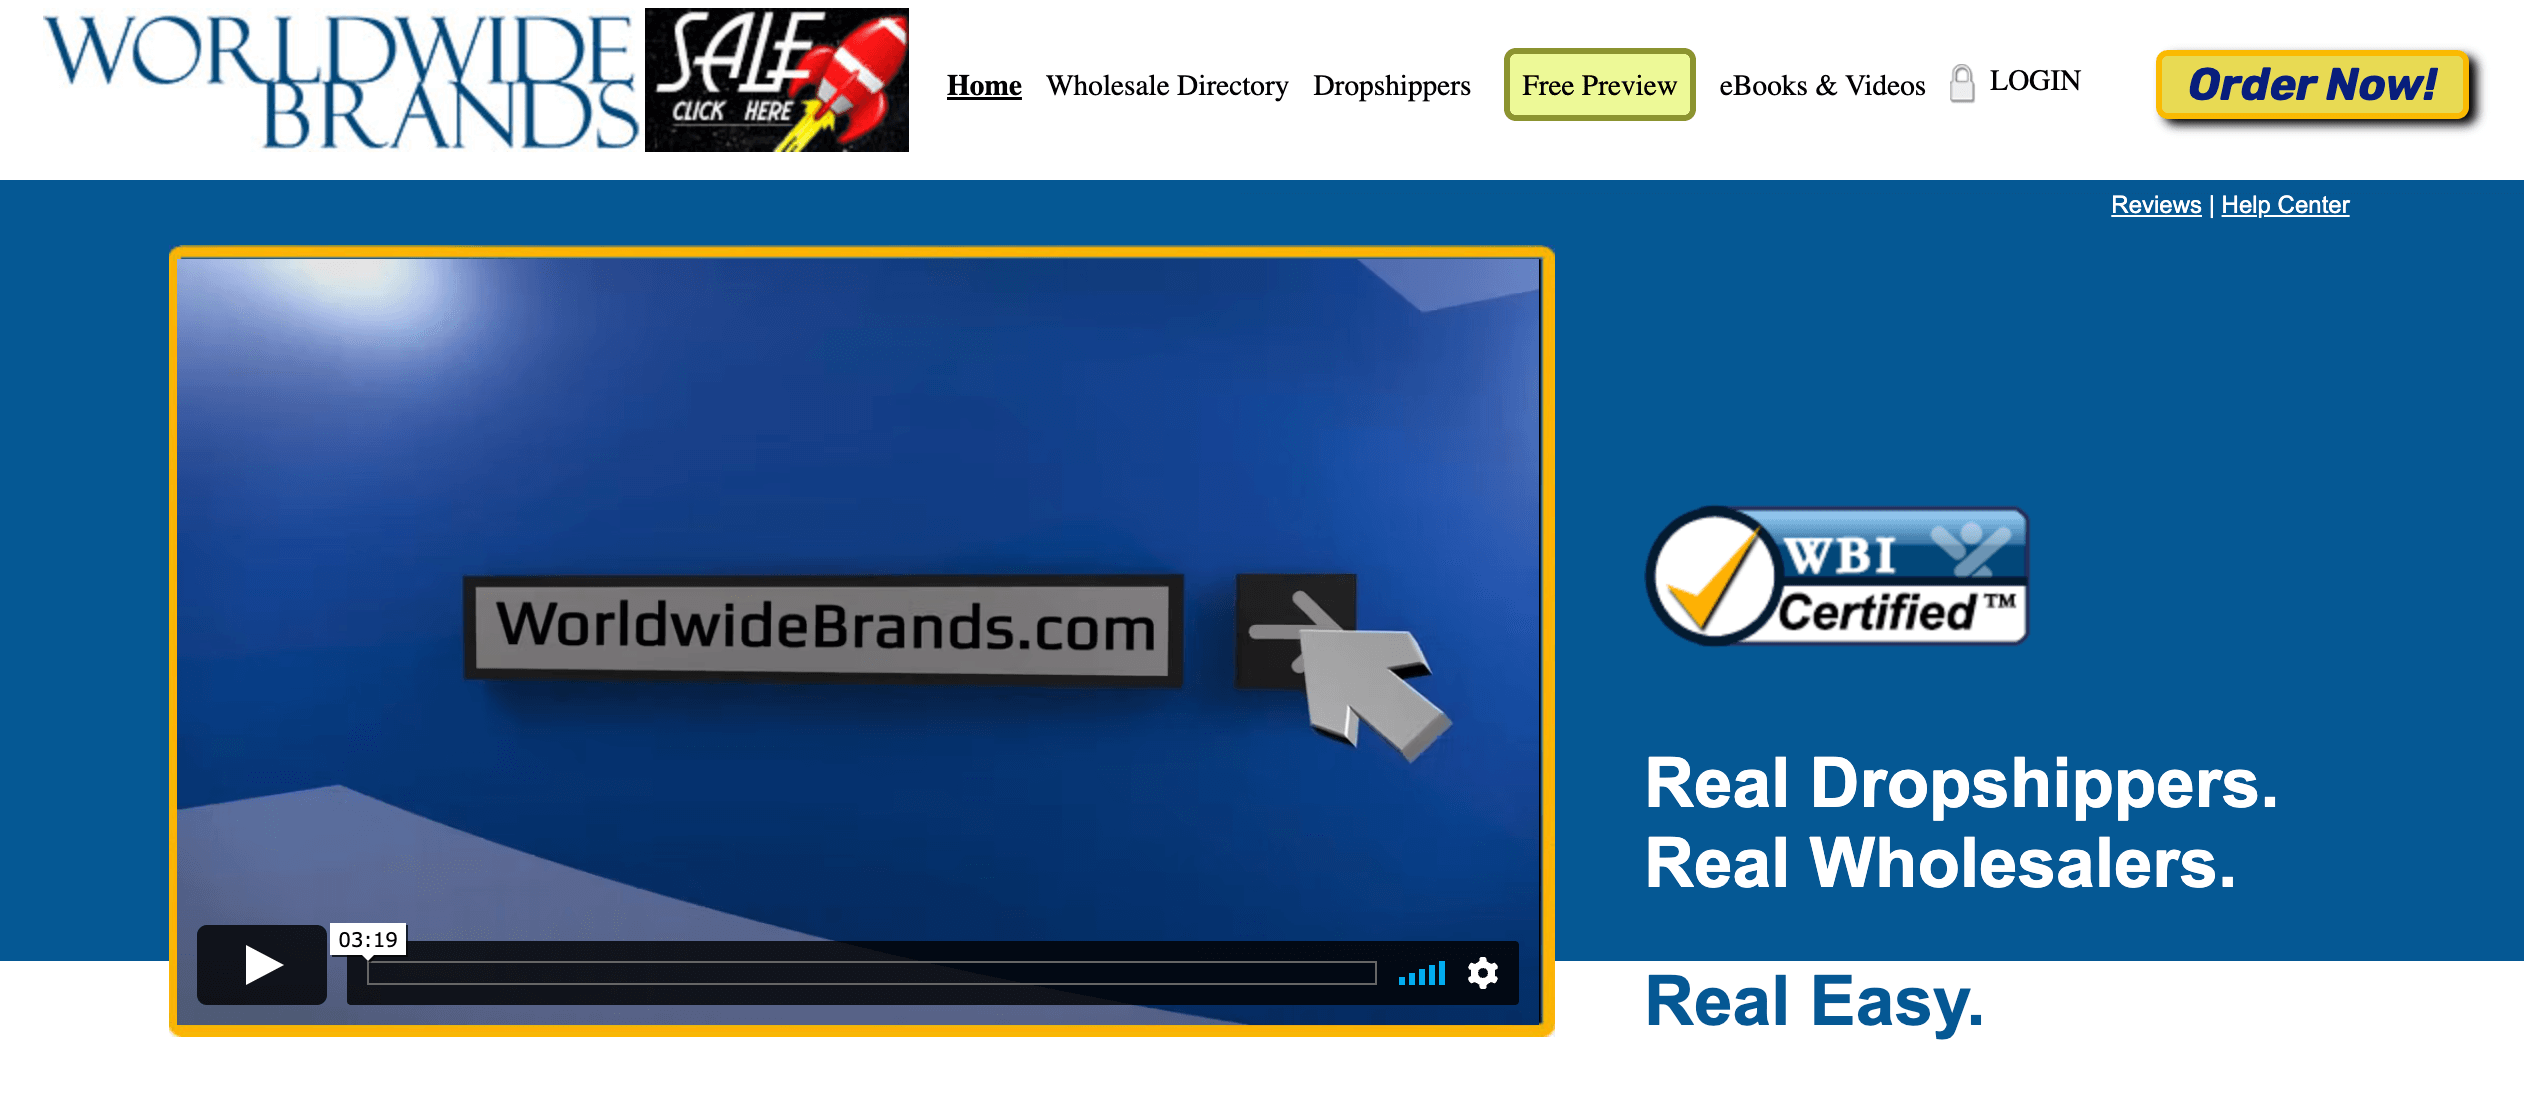 Worldwidebrands' homepage